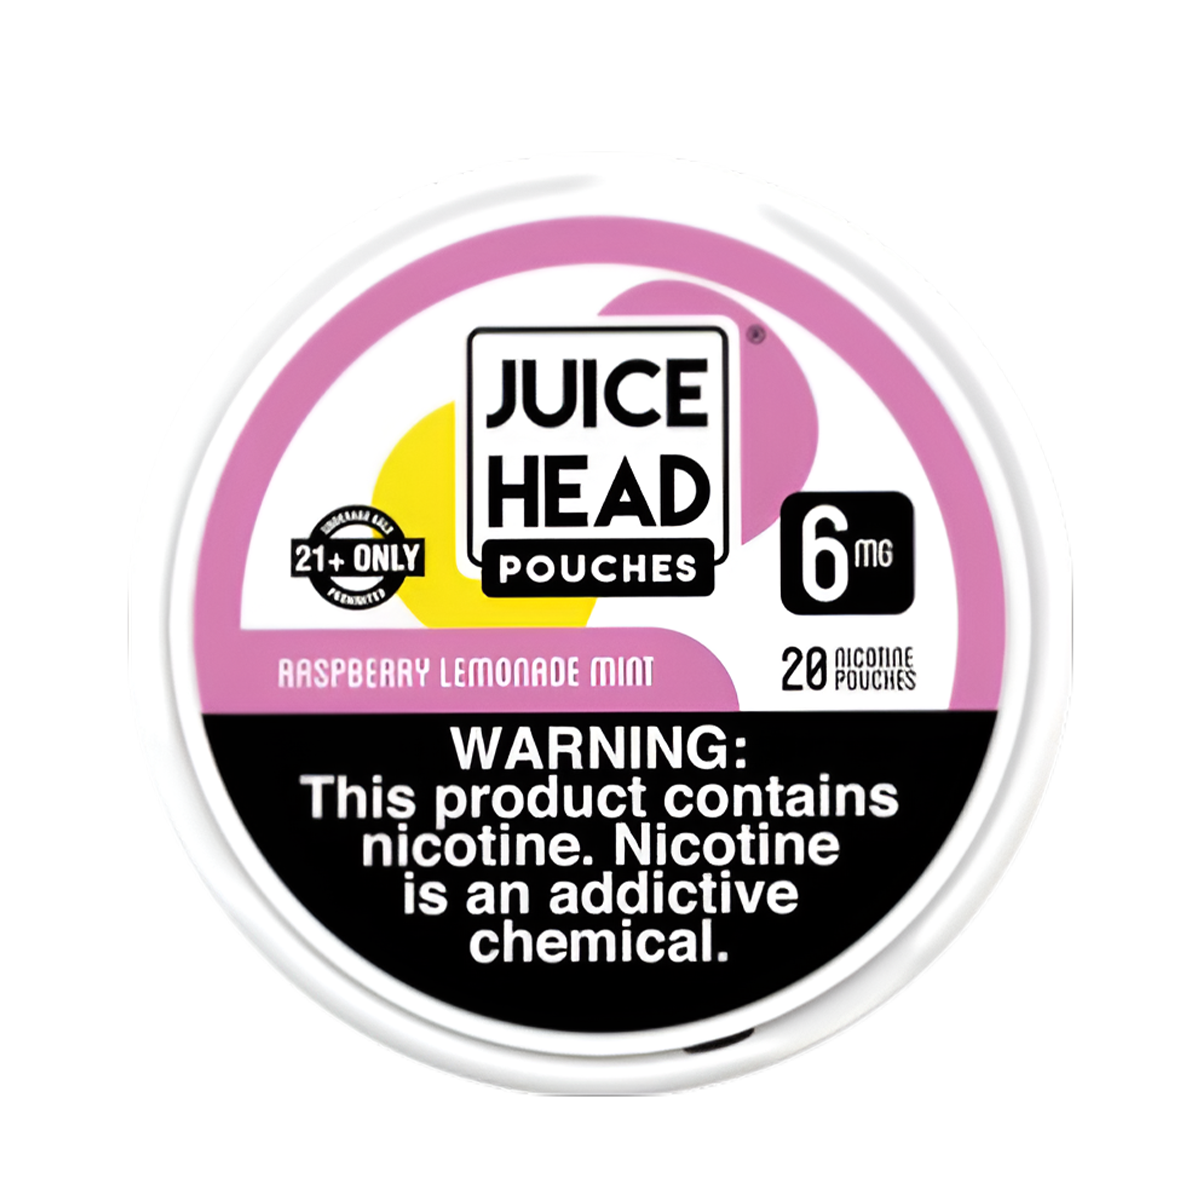 Juice Head Nicotine Pouches 6 Mg 20 Nicotine Punches Raspberry Lemonade Mint